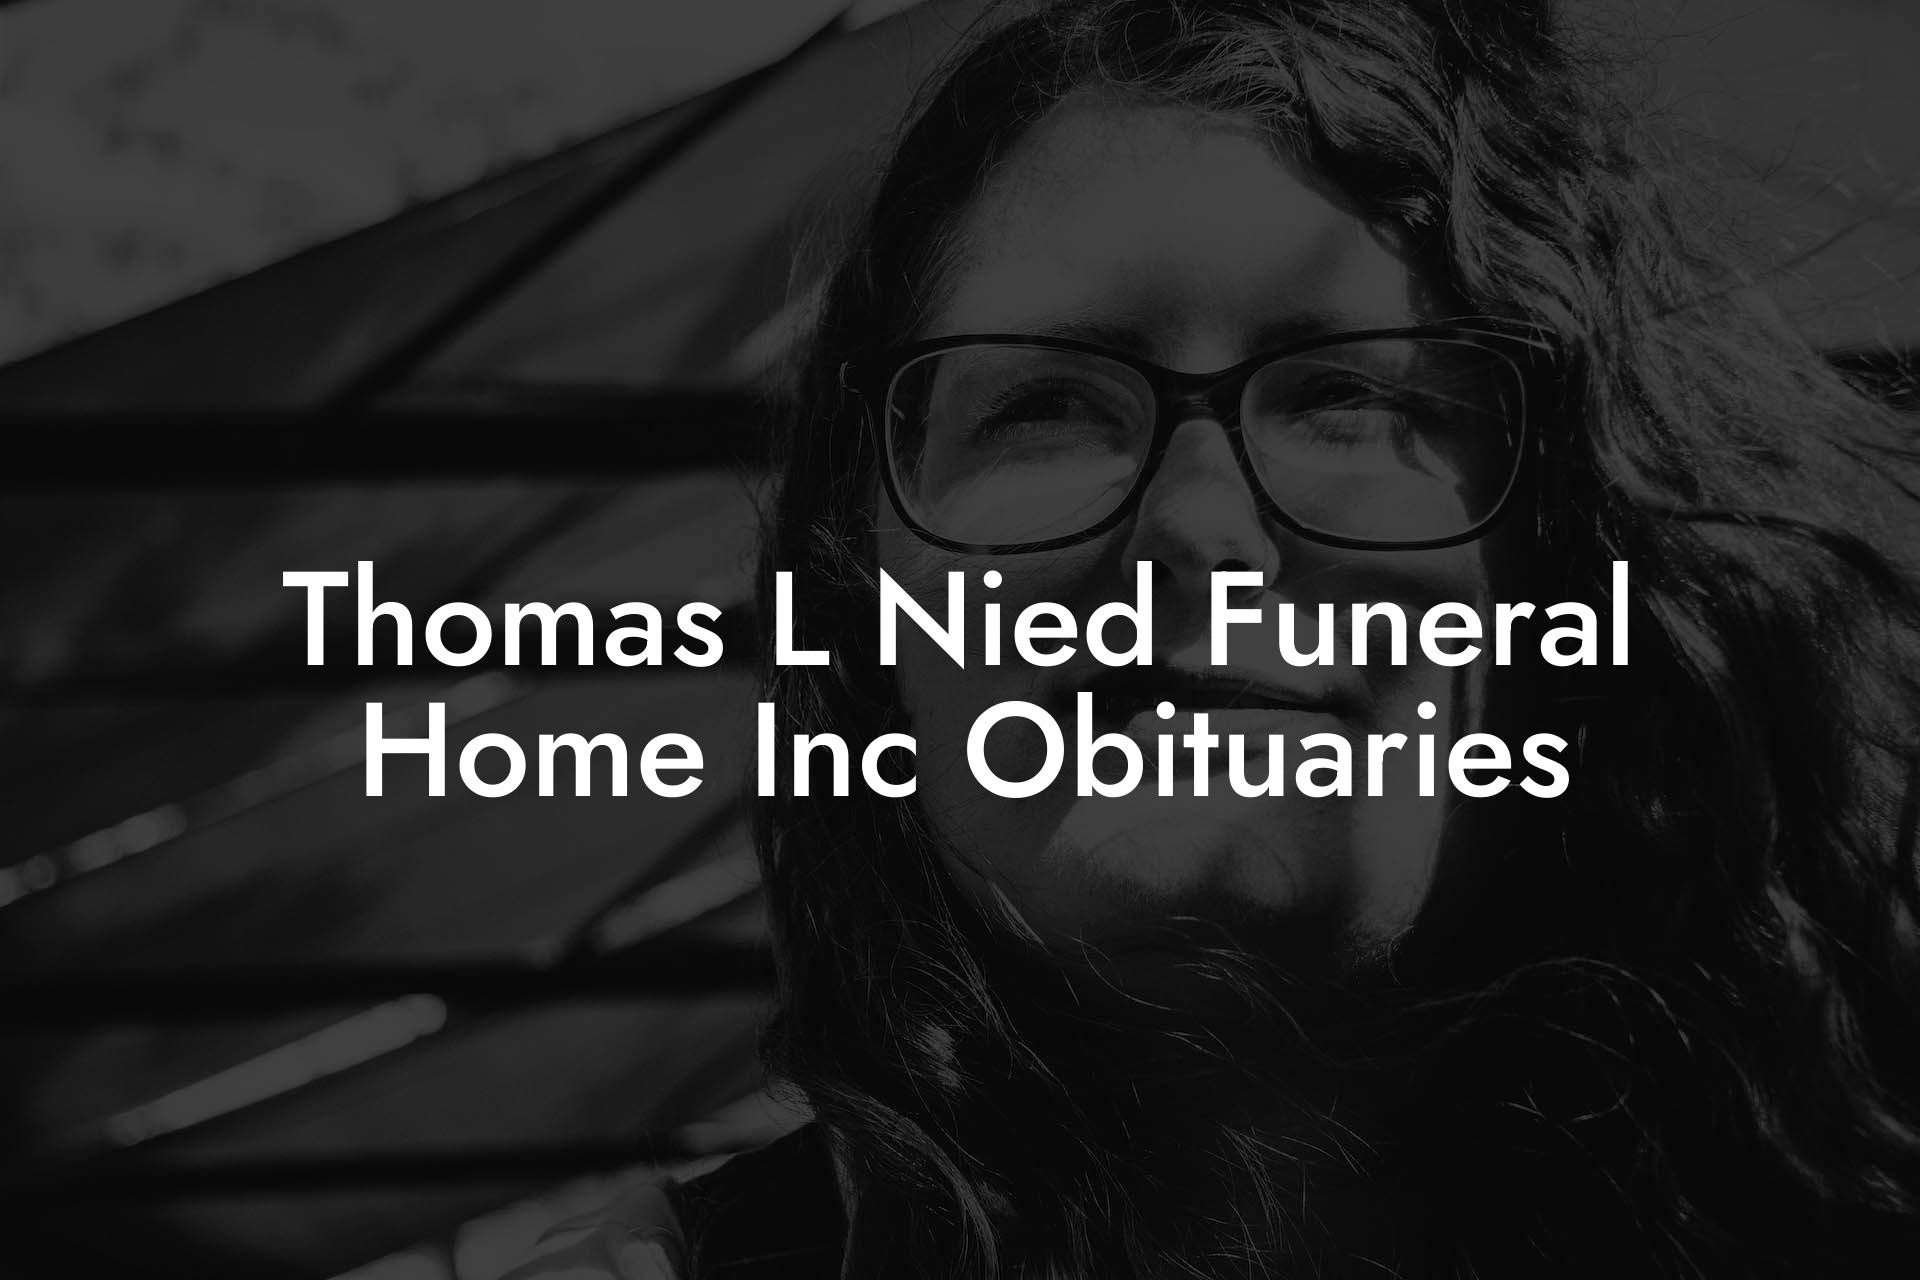 Thomas L Nied Funeral Home Inc Obituaries